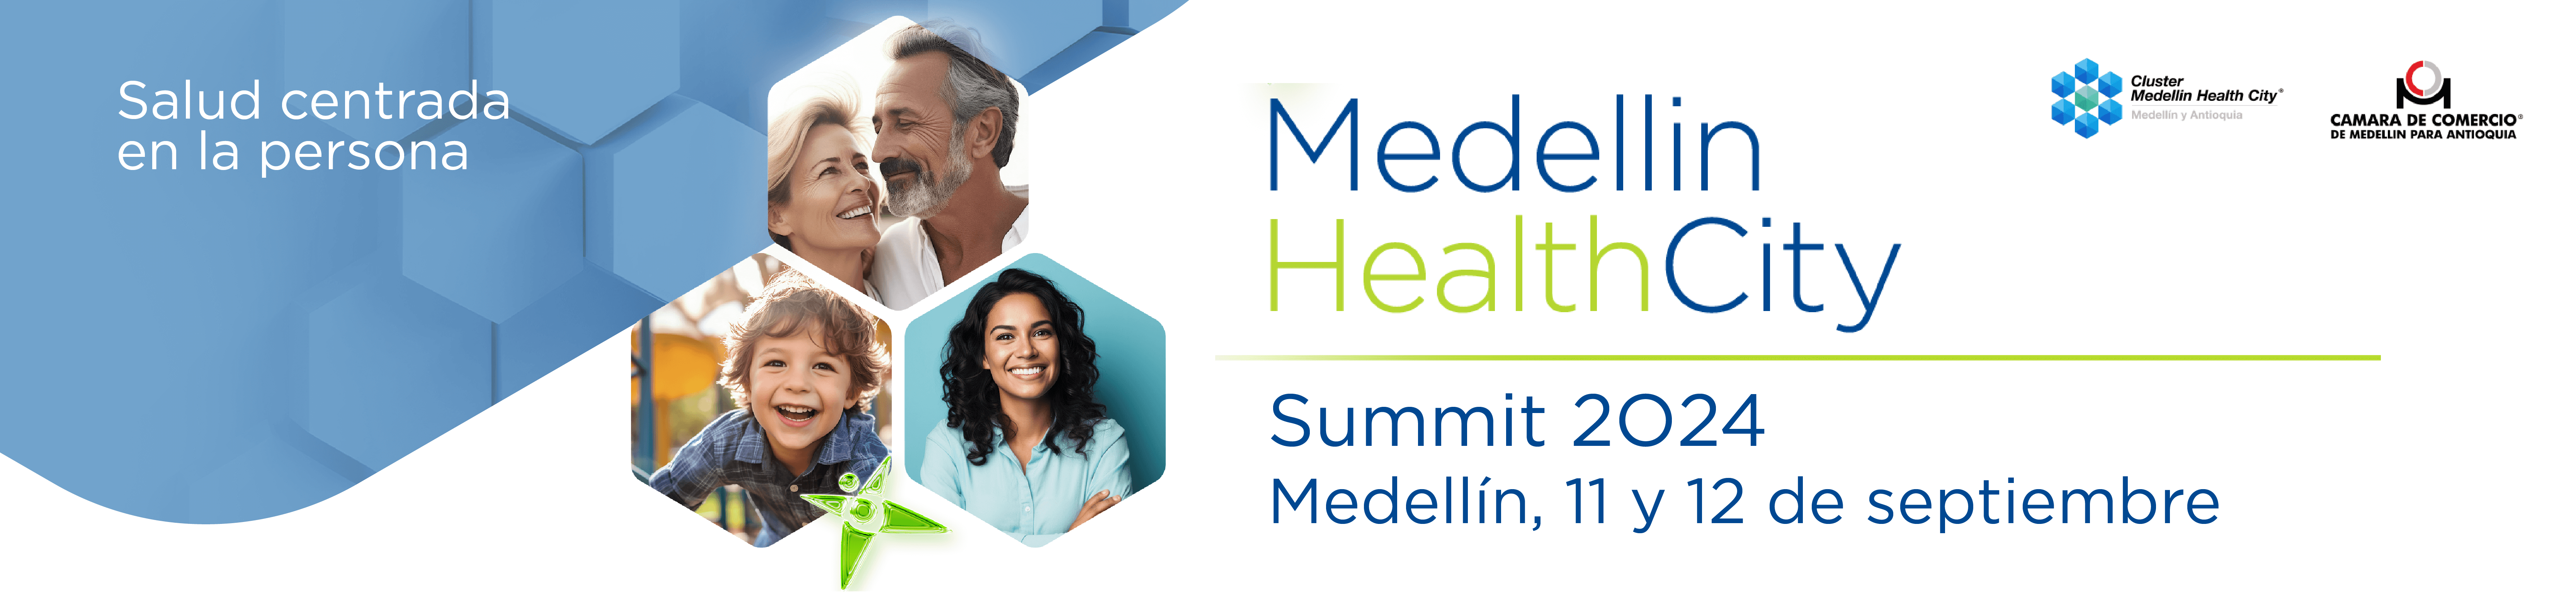 Medellín Health City Summit 2024